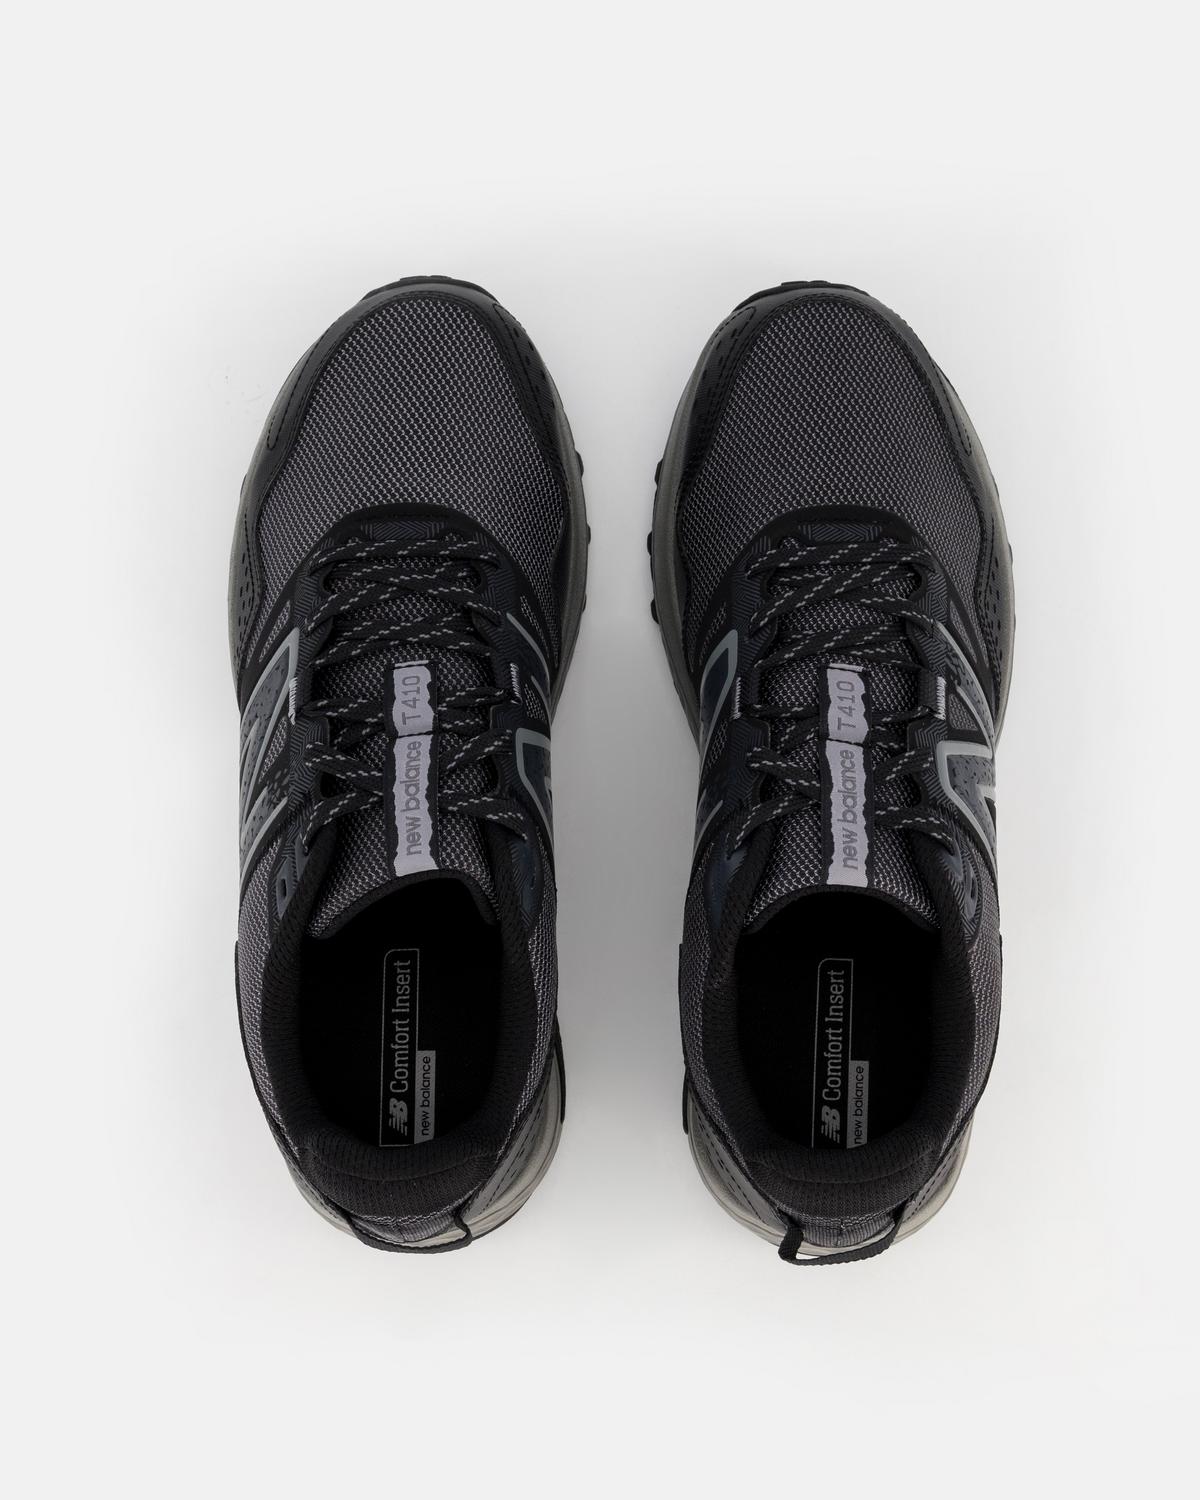 New Balance Men’s 410v8 Trail Running Shoes -  charcoal